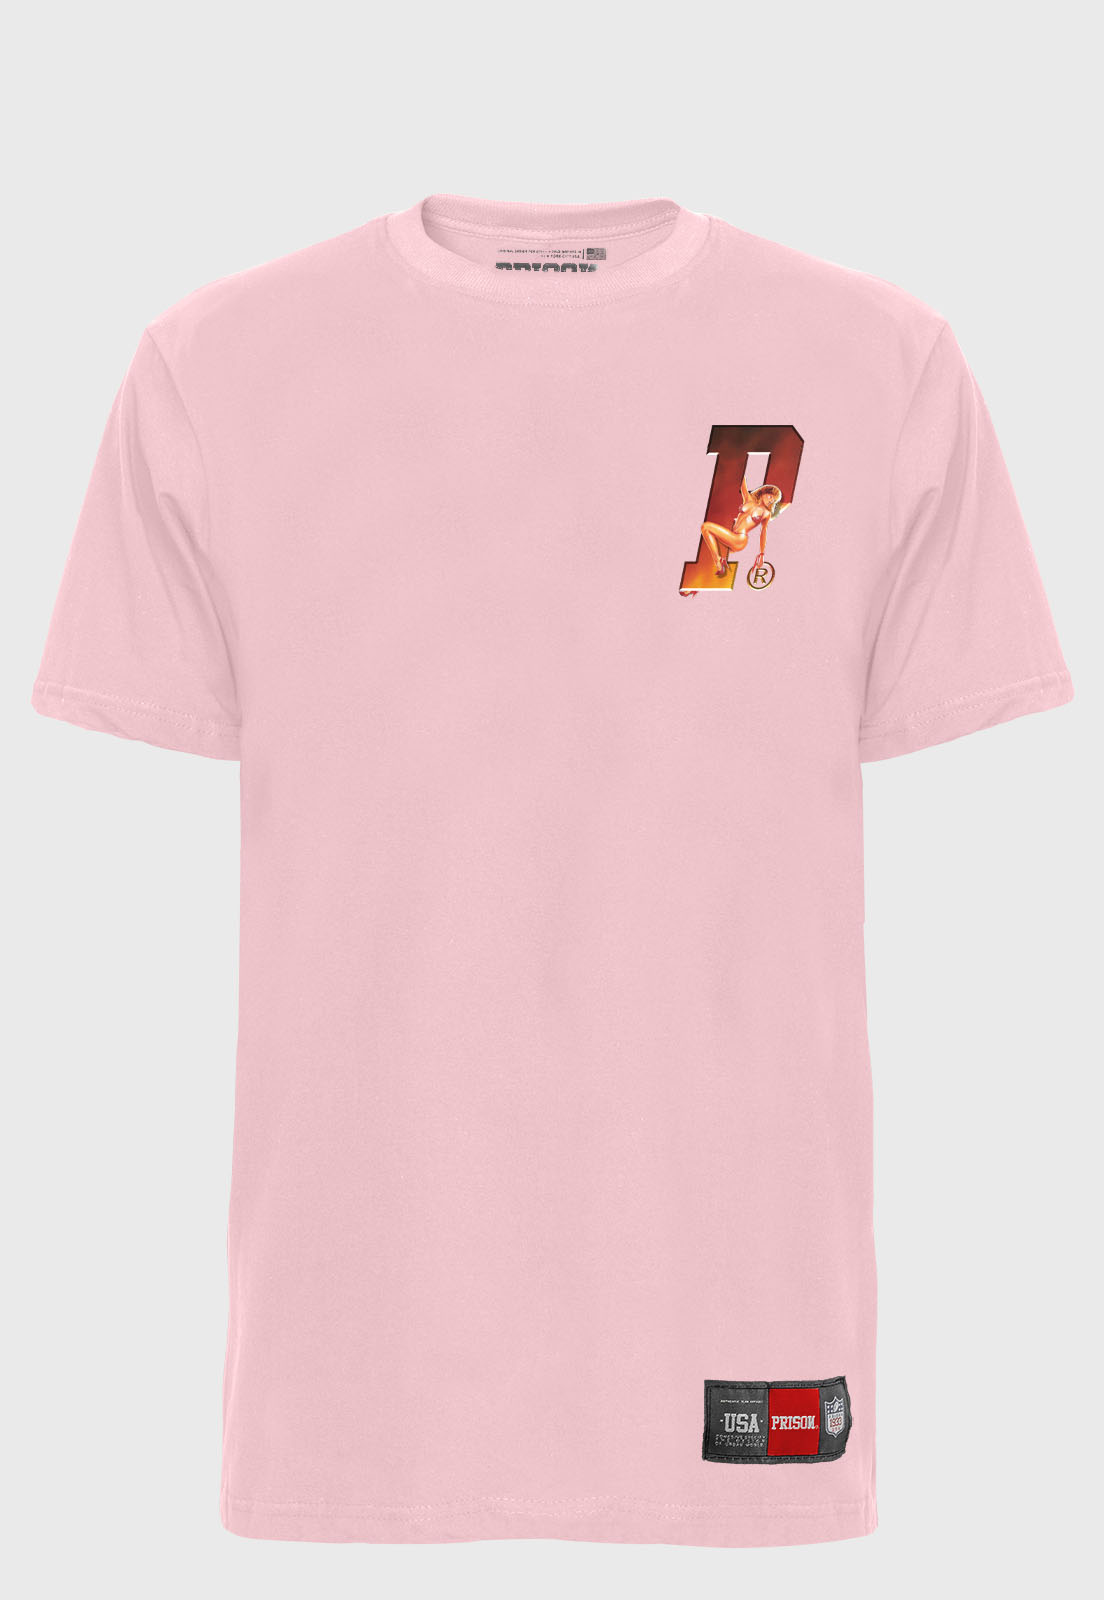 Camiseta Streetwear Pink Prison Striper Girl